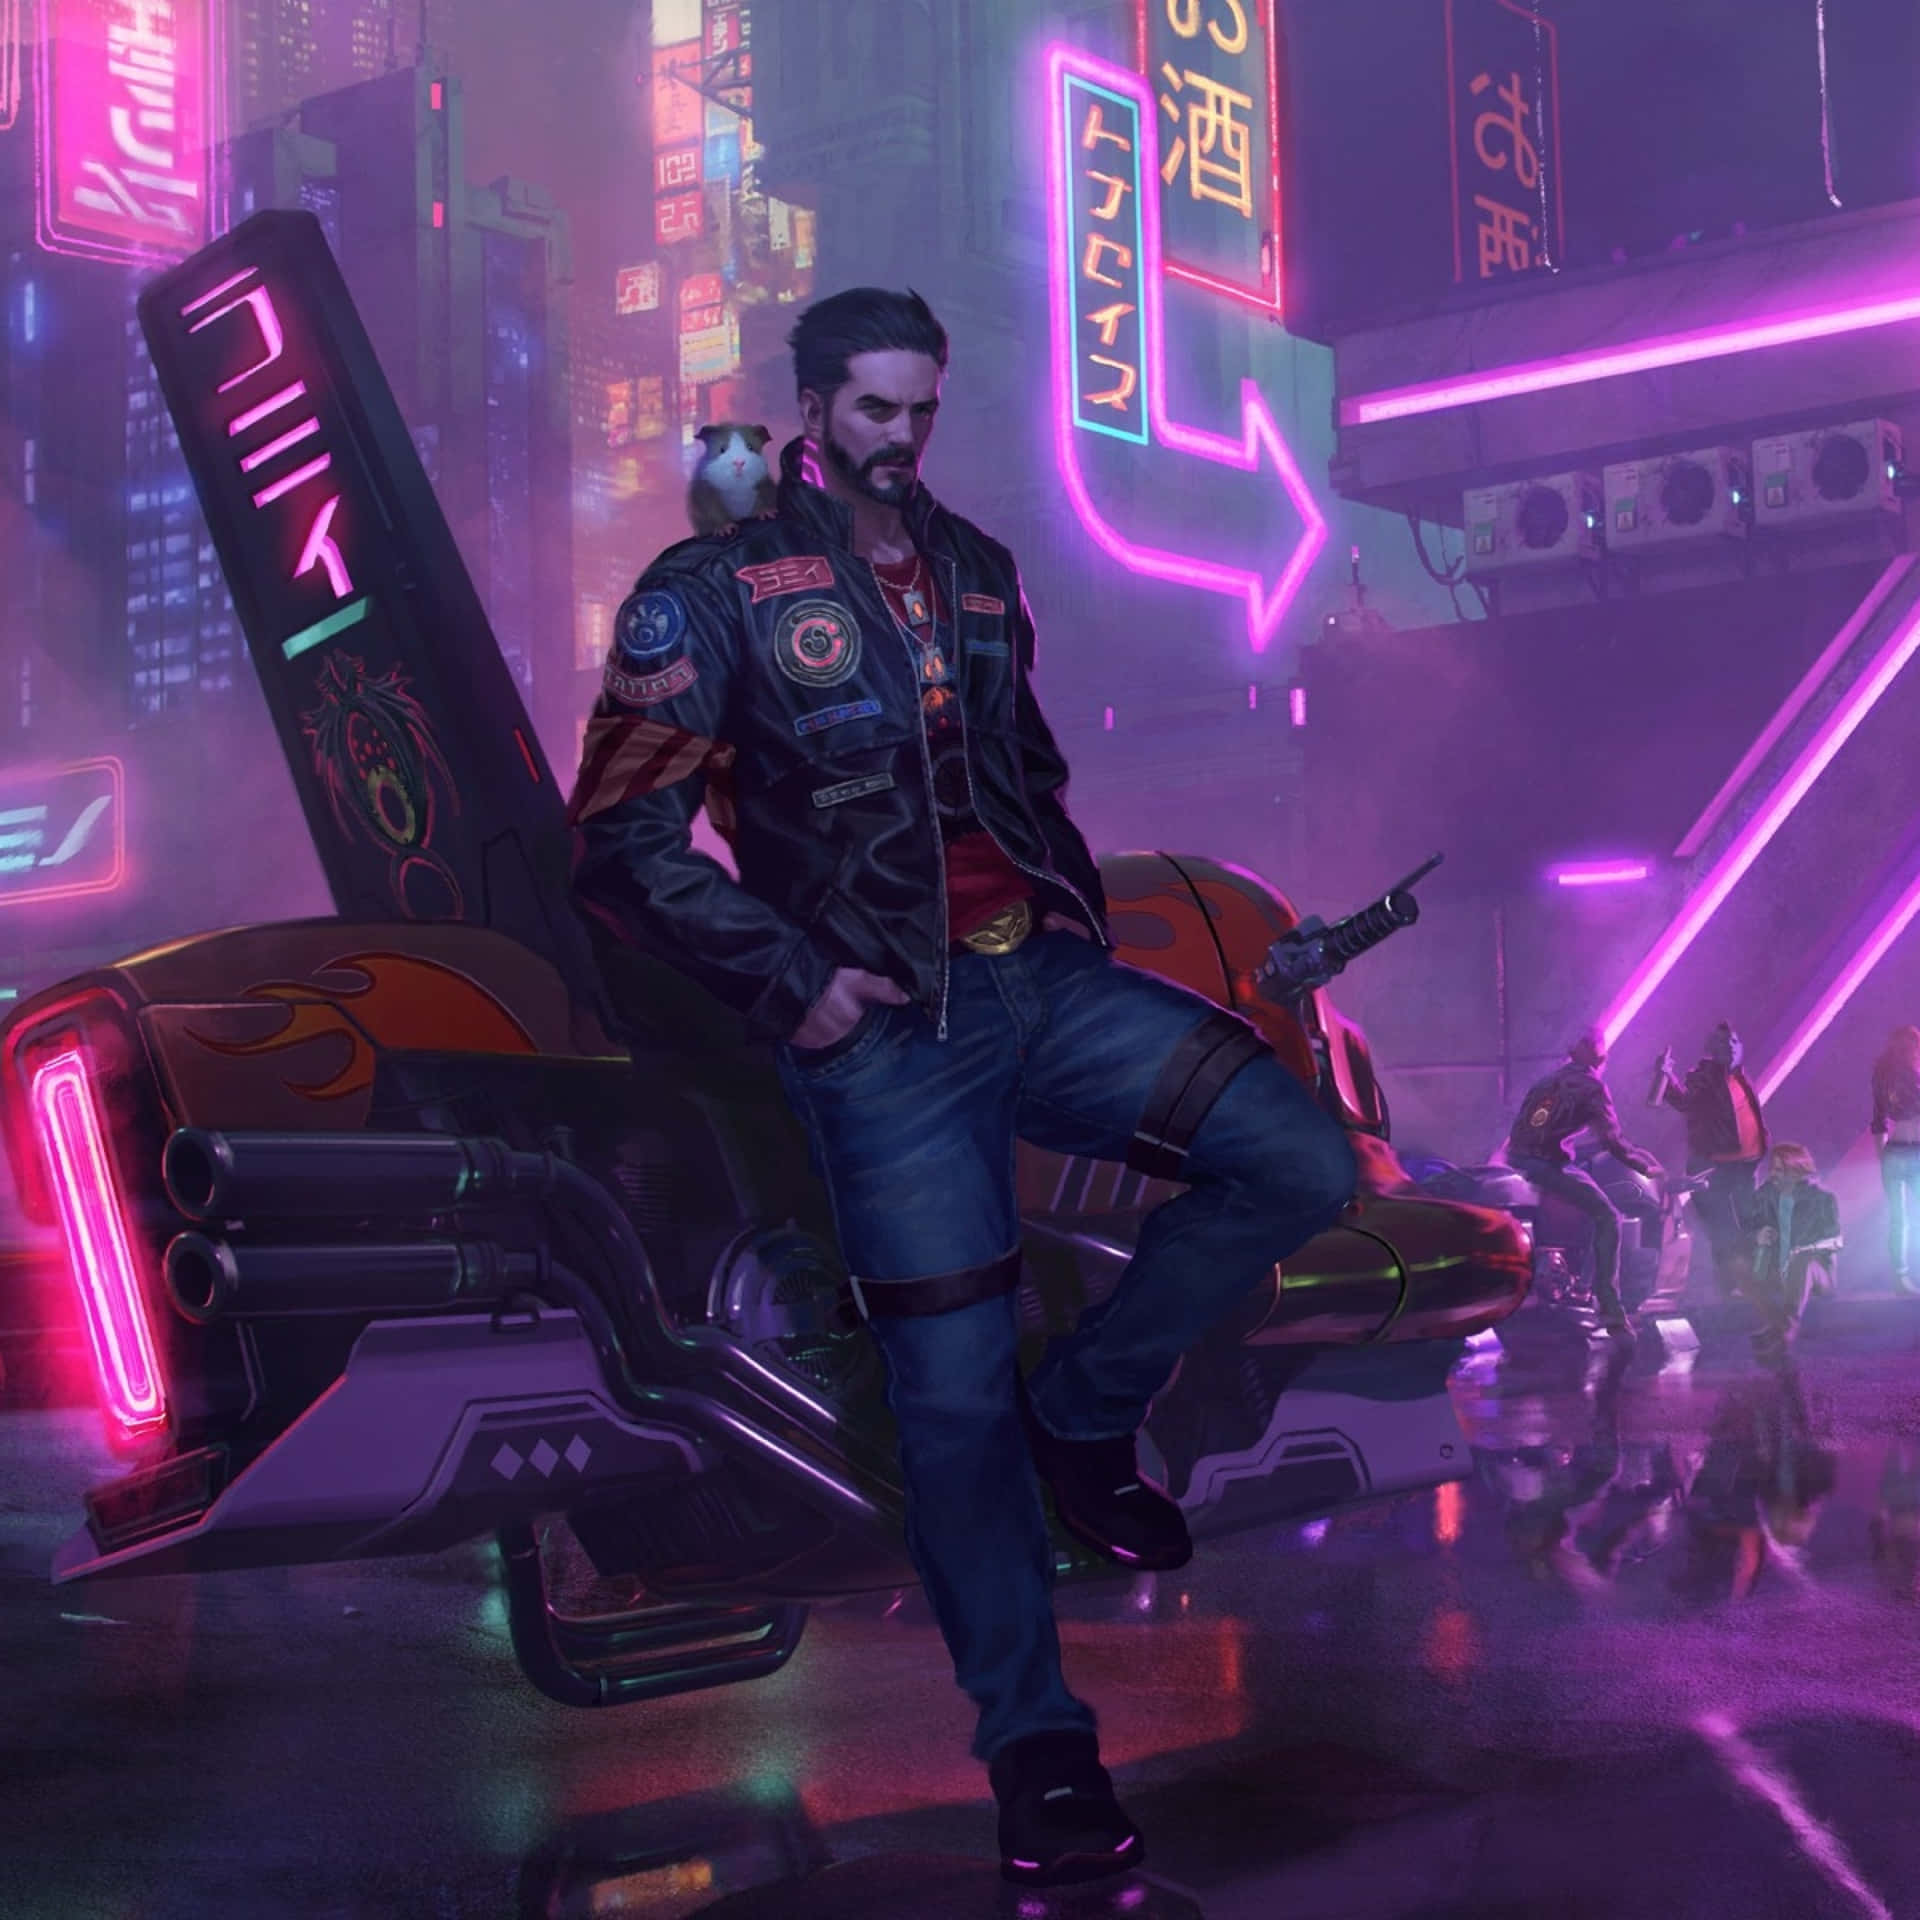 Cyberpunk Cityscape With Character.jpg Wallpaper